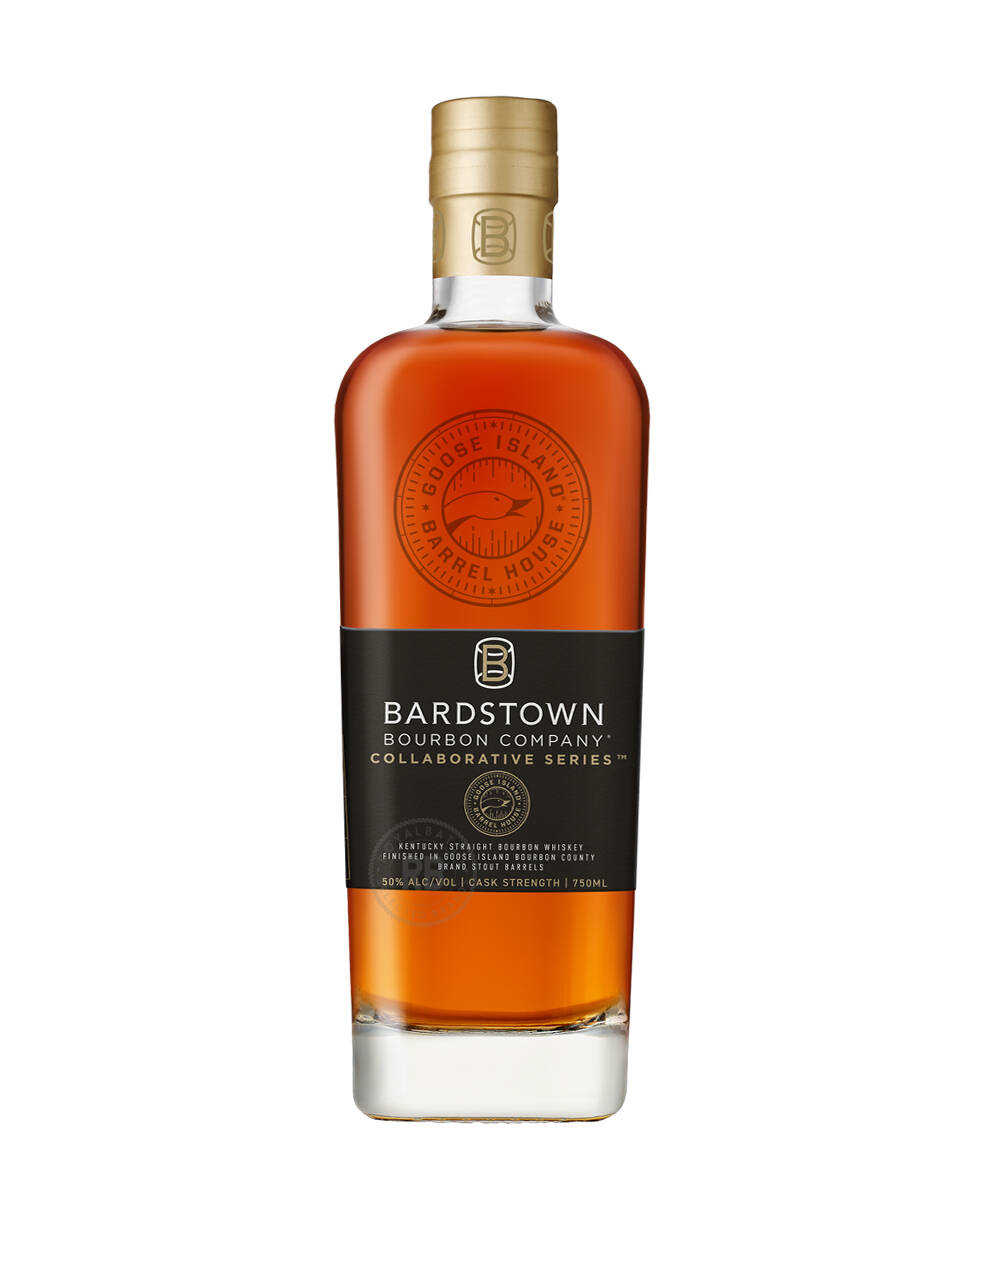 Bardstown Bourbon Company Goose Island Collaboration Series Bourbon Whiskey